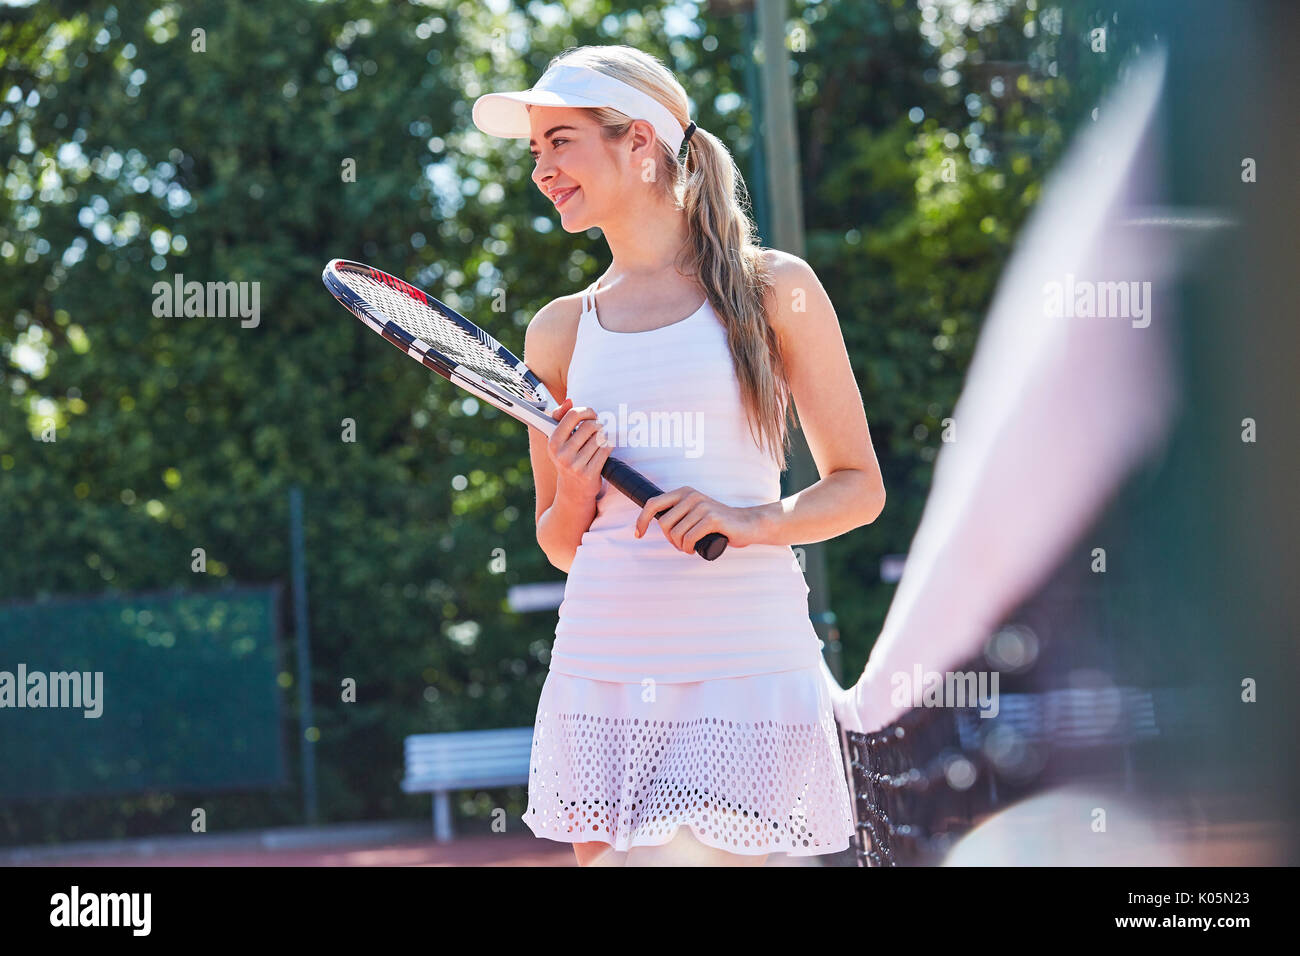 Lächelnde junge weibliche Tennisspieler holding Tennisschläger entlang sonnigen Net Stockfoto